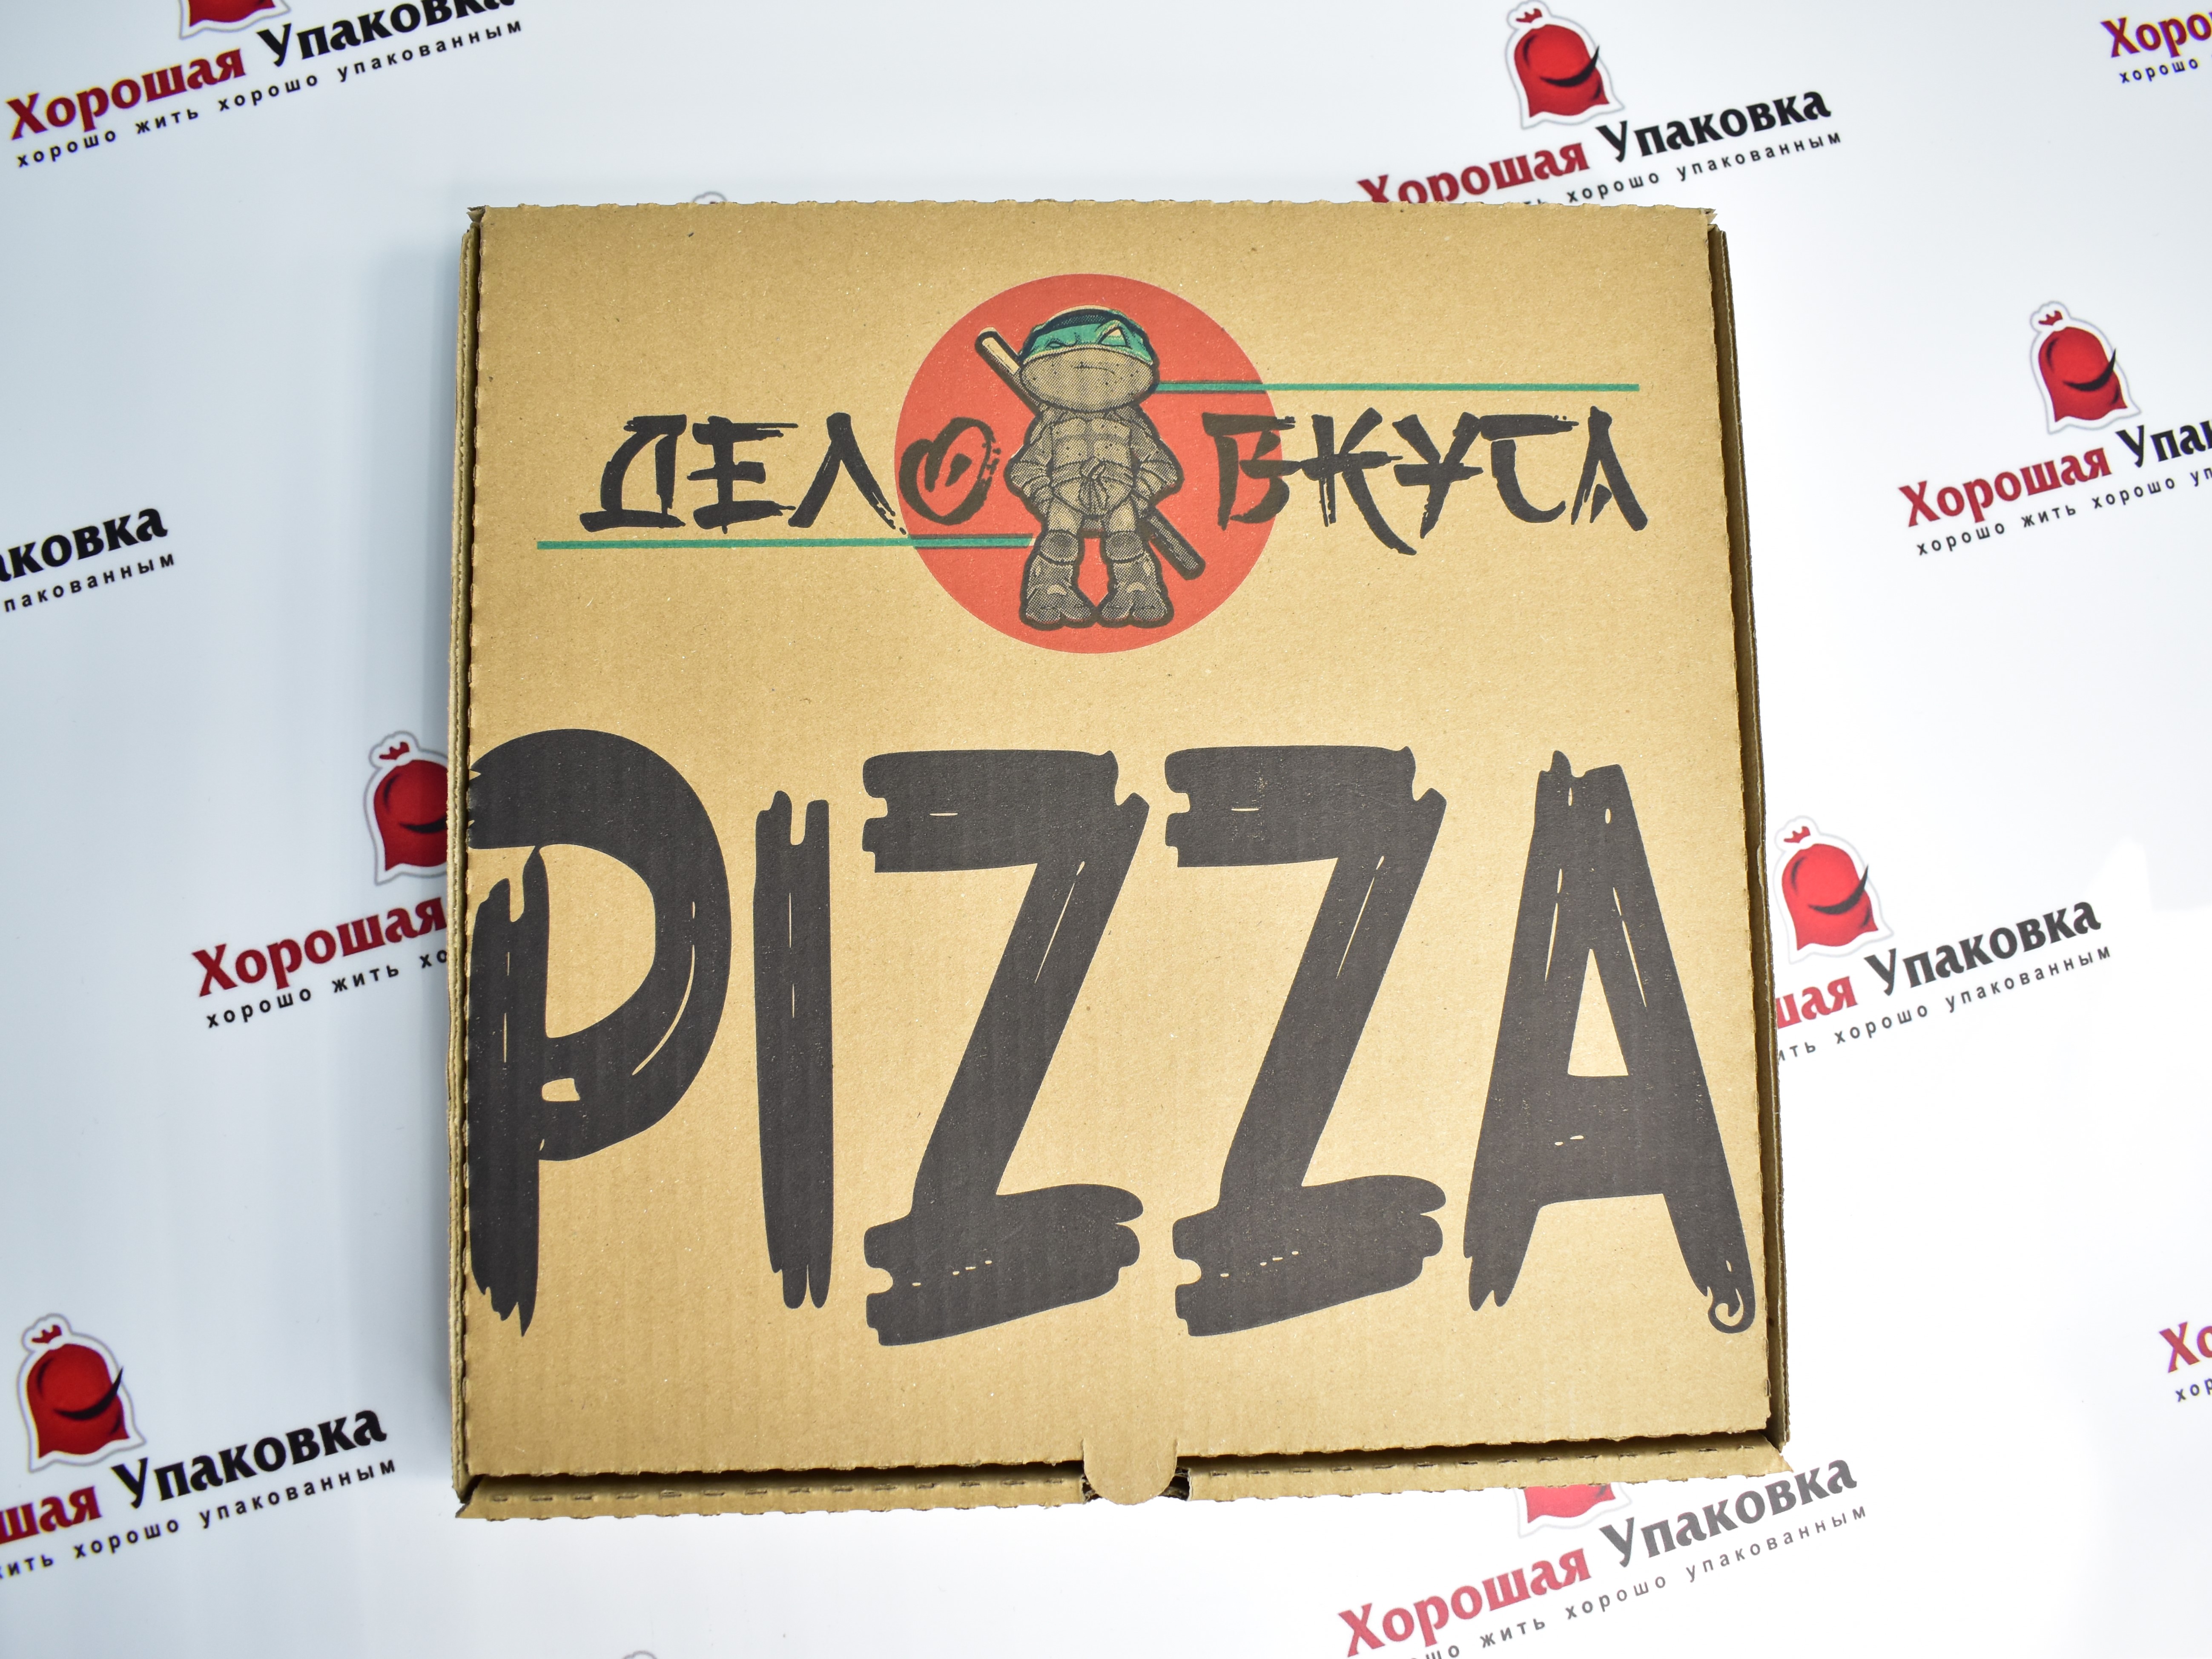 310х310х40 Коробка под пиццу с вашим логотипом с прямыми углами